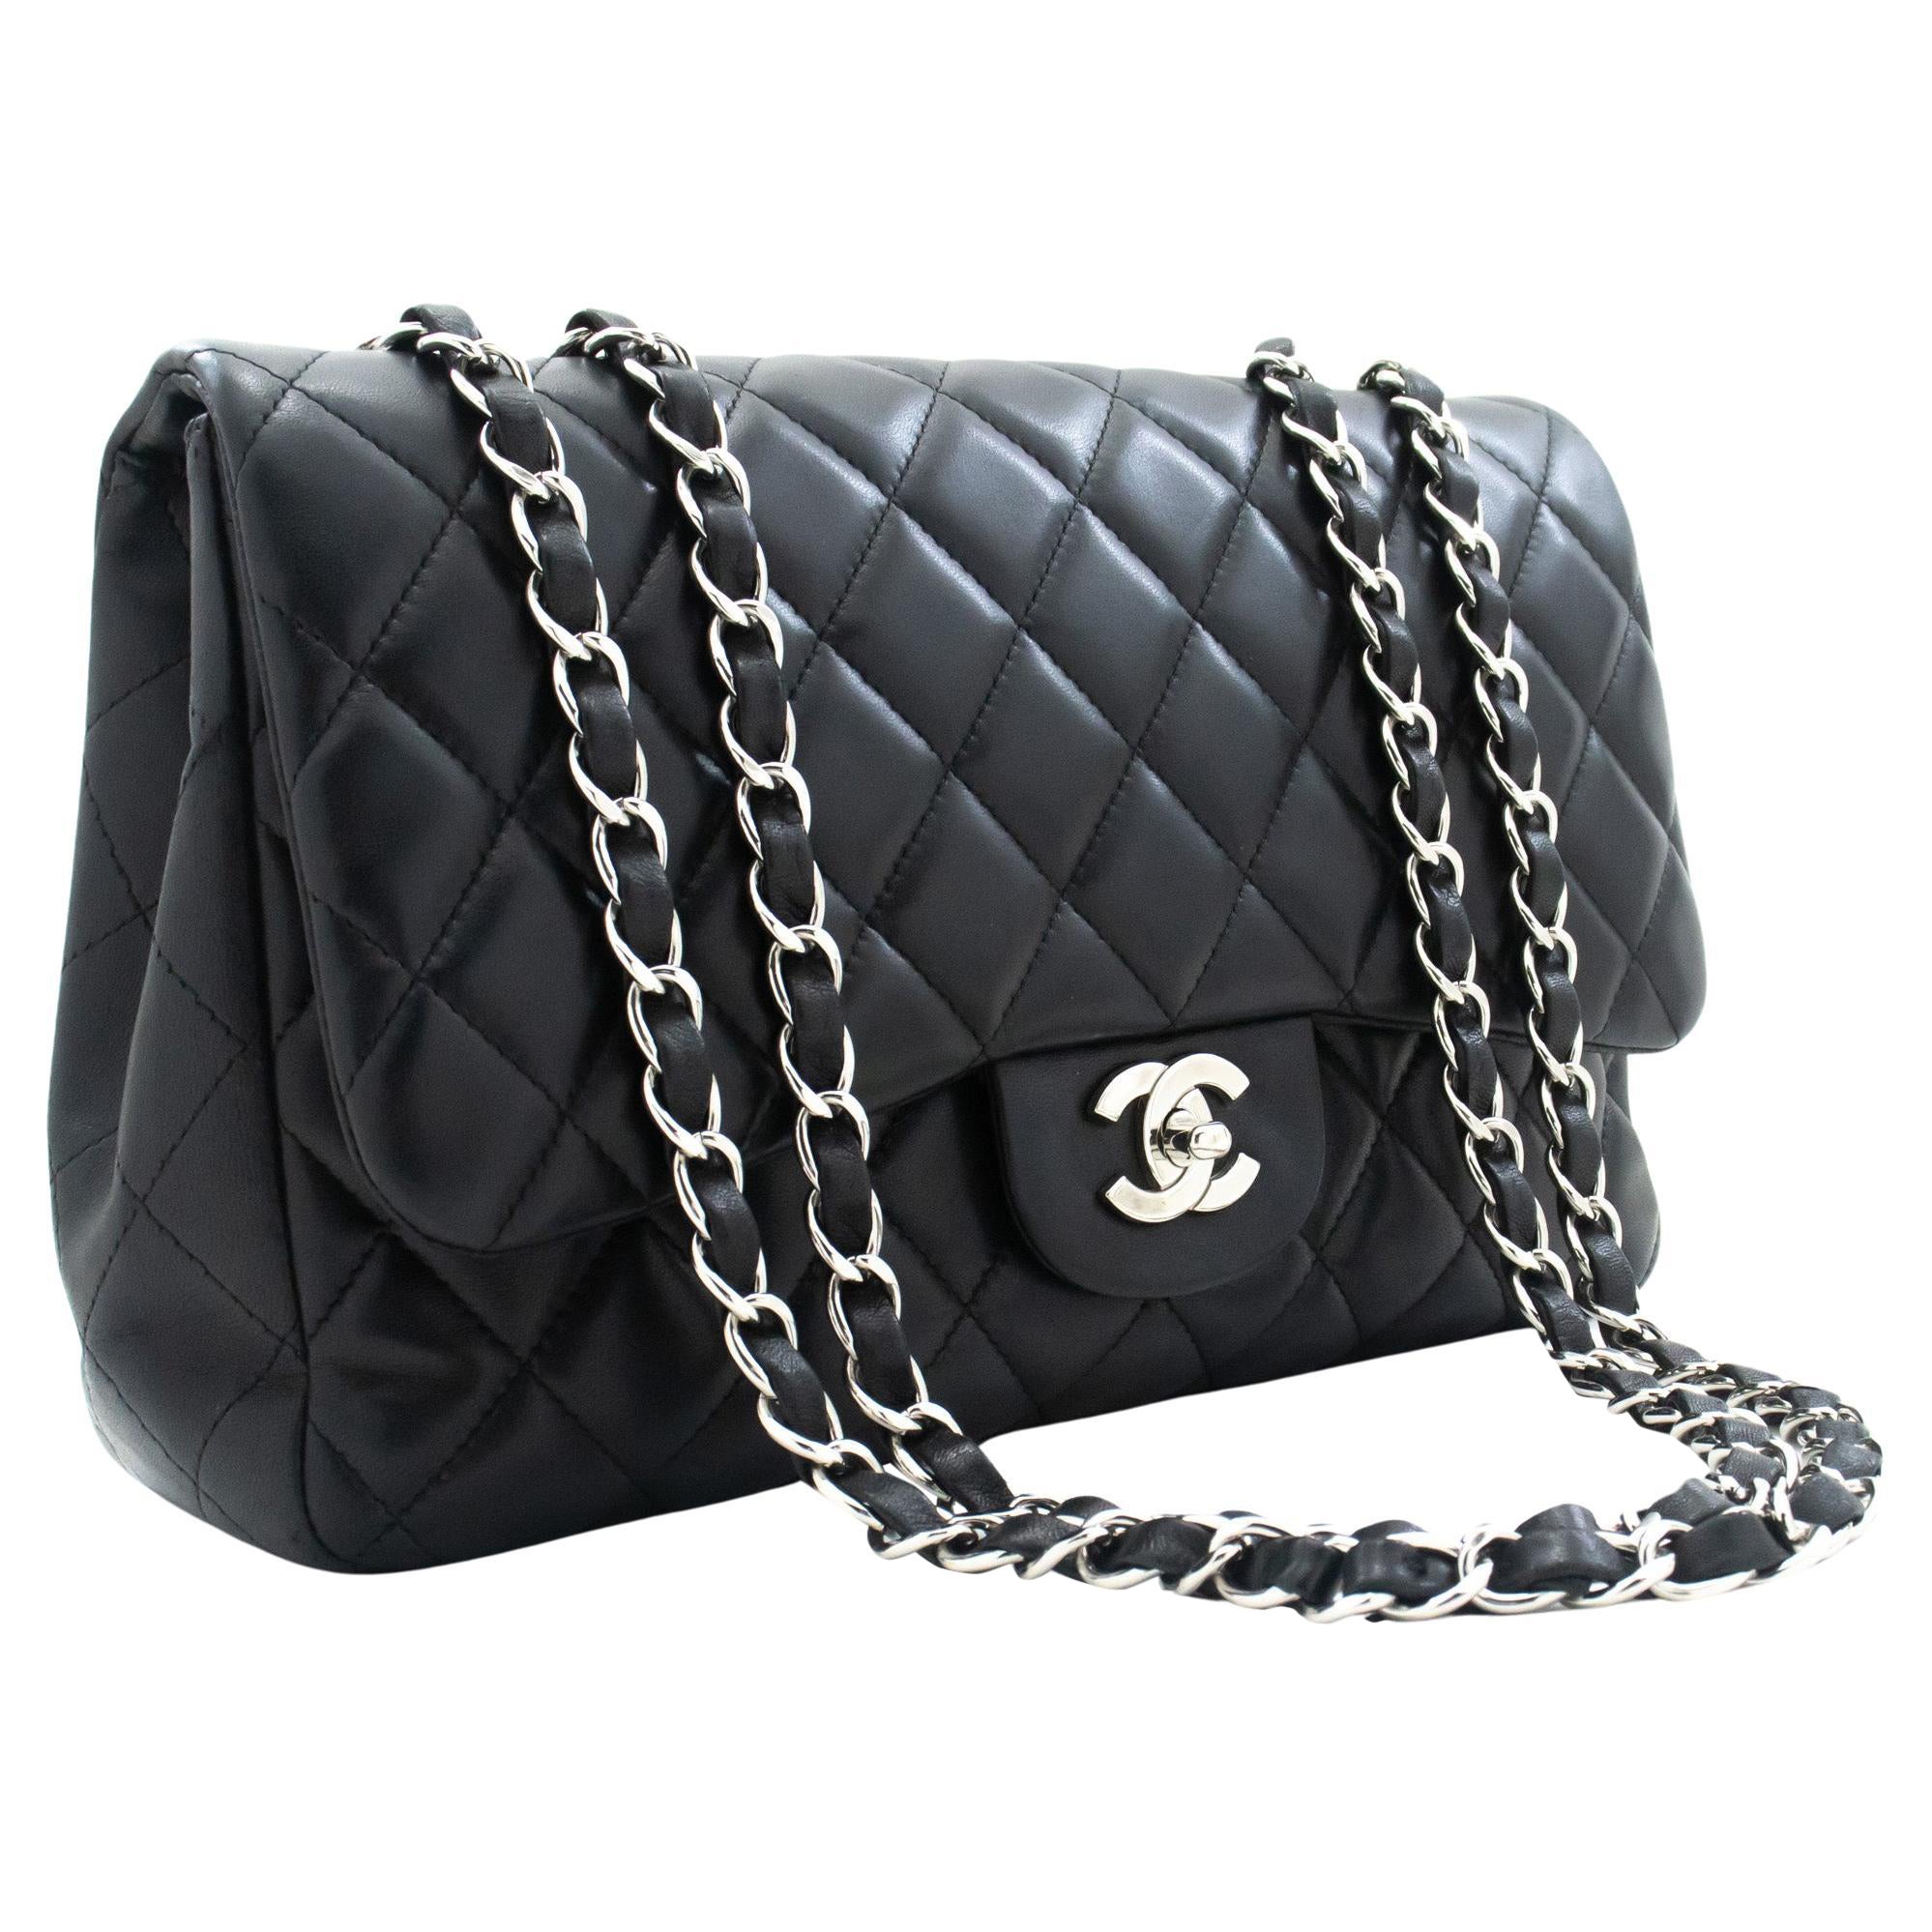 Chanel Large Classic Handbag 11chain Shoulder Bag Flap Black Lamb